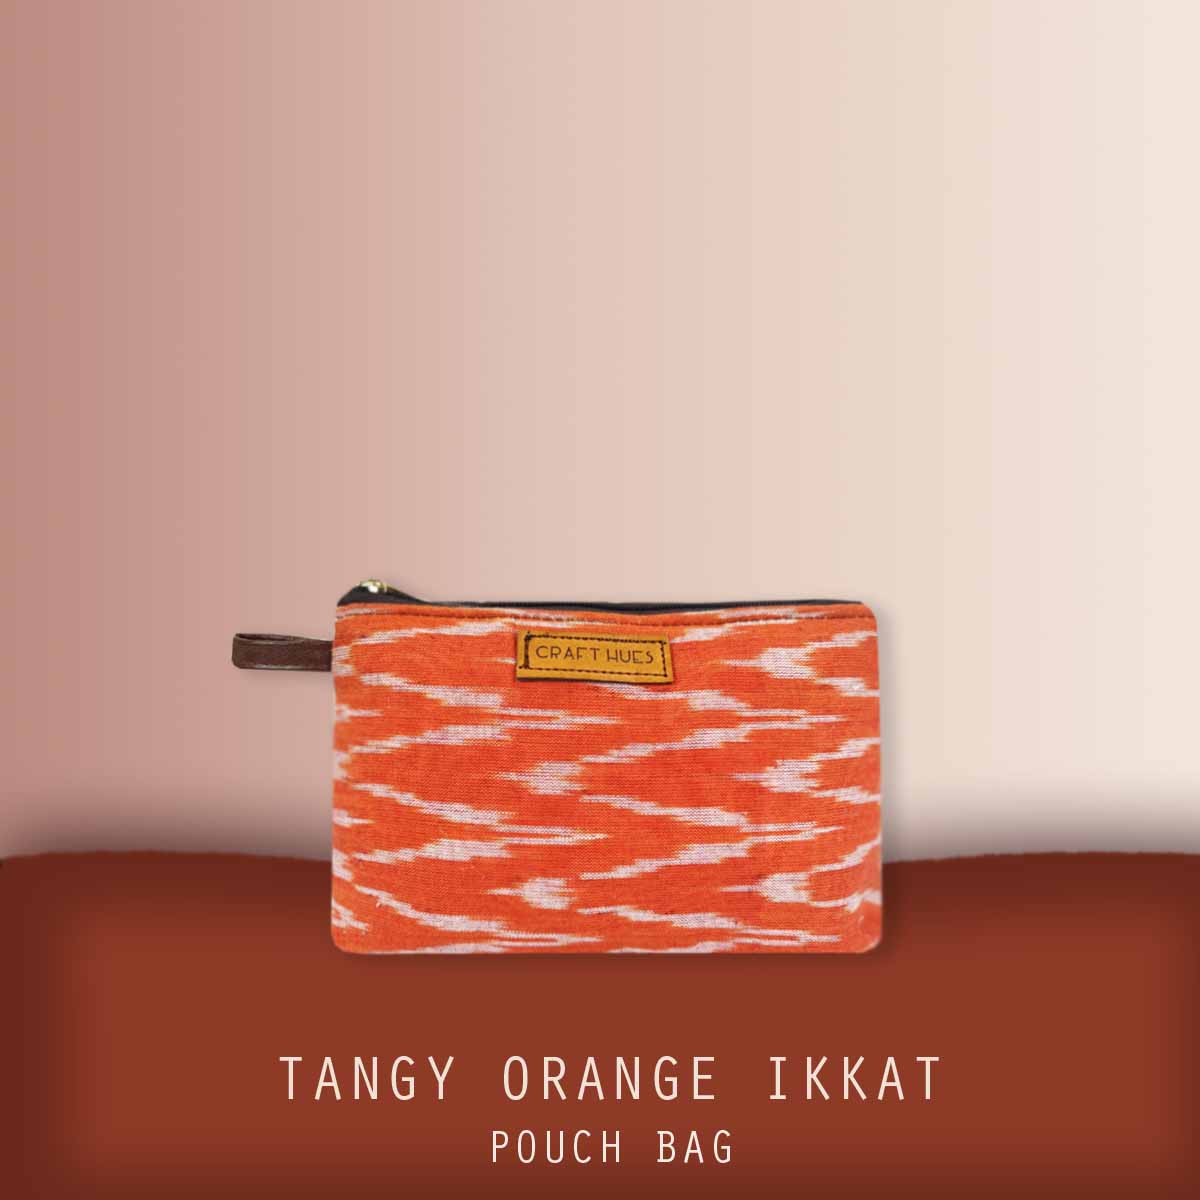 Tangy Orange Ikkat Pouch Bag